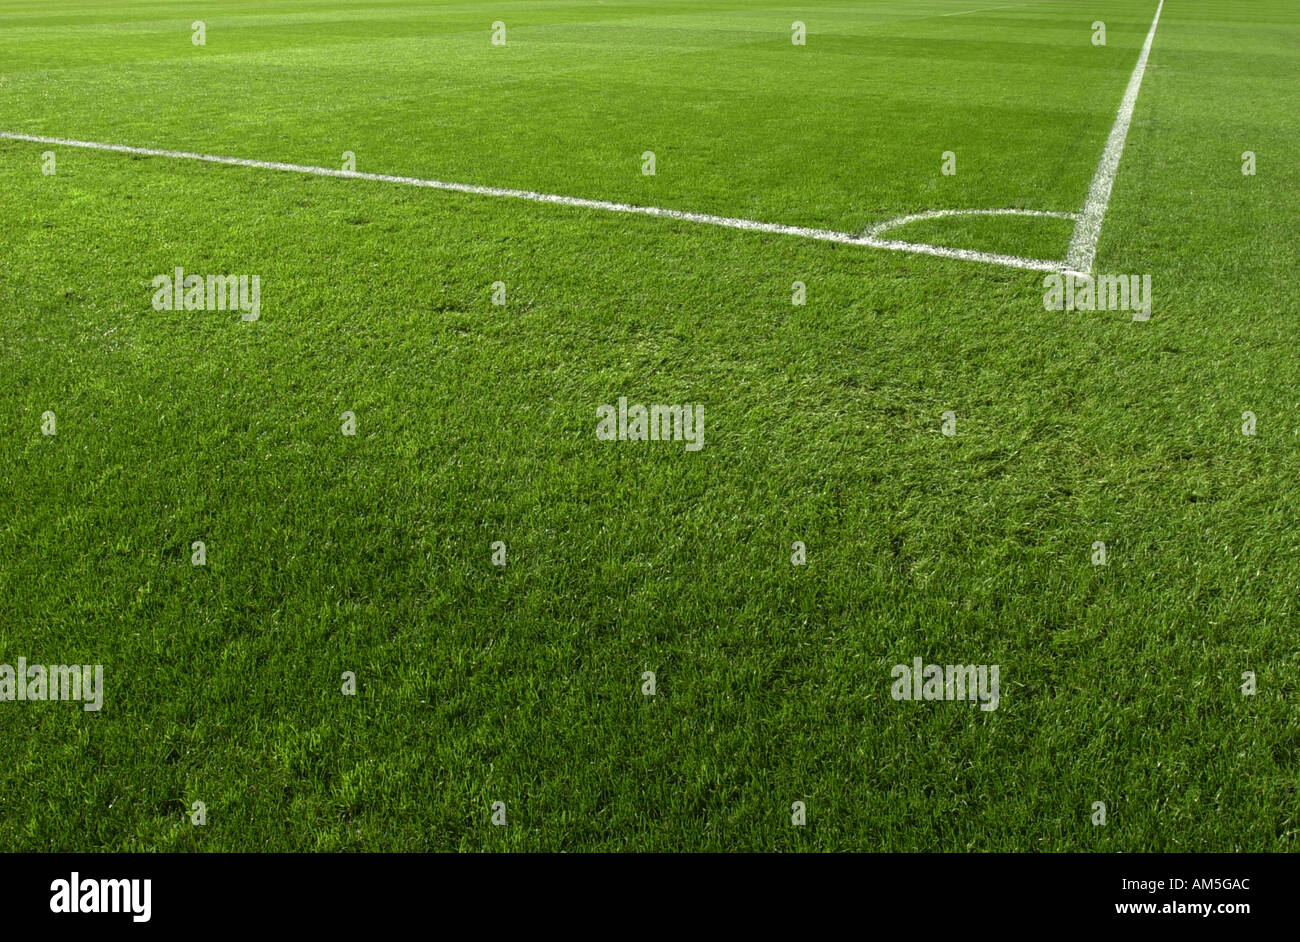 Football pitch Stock Photo